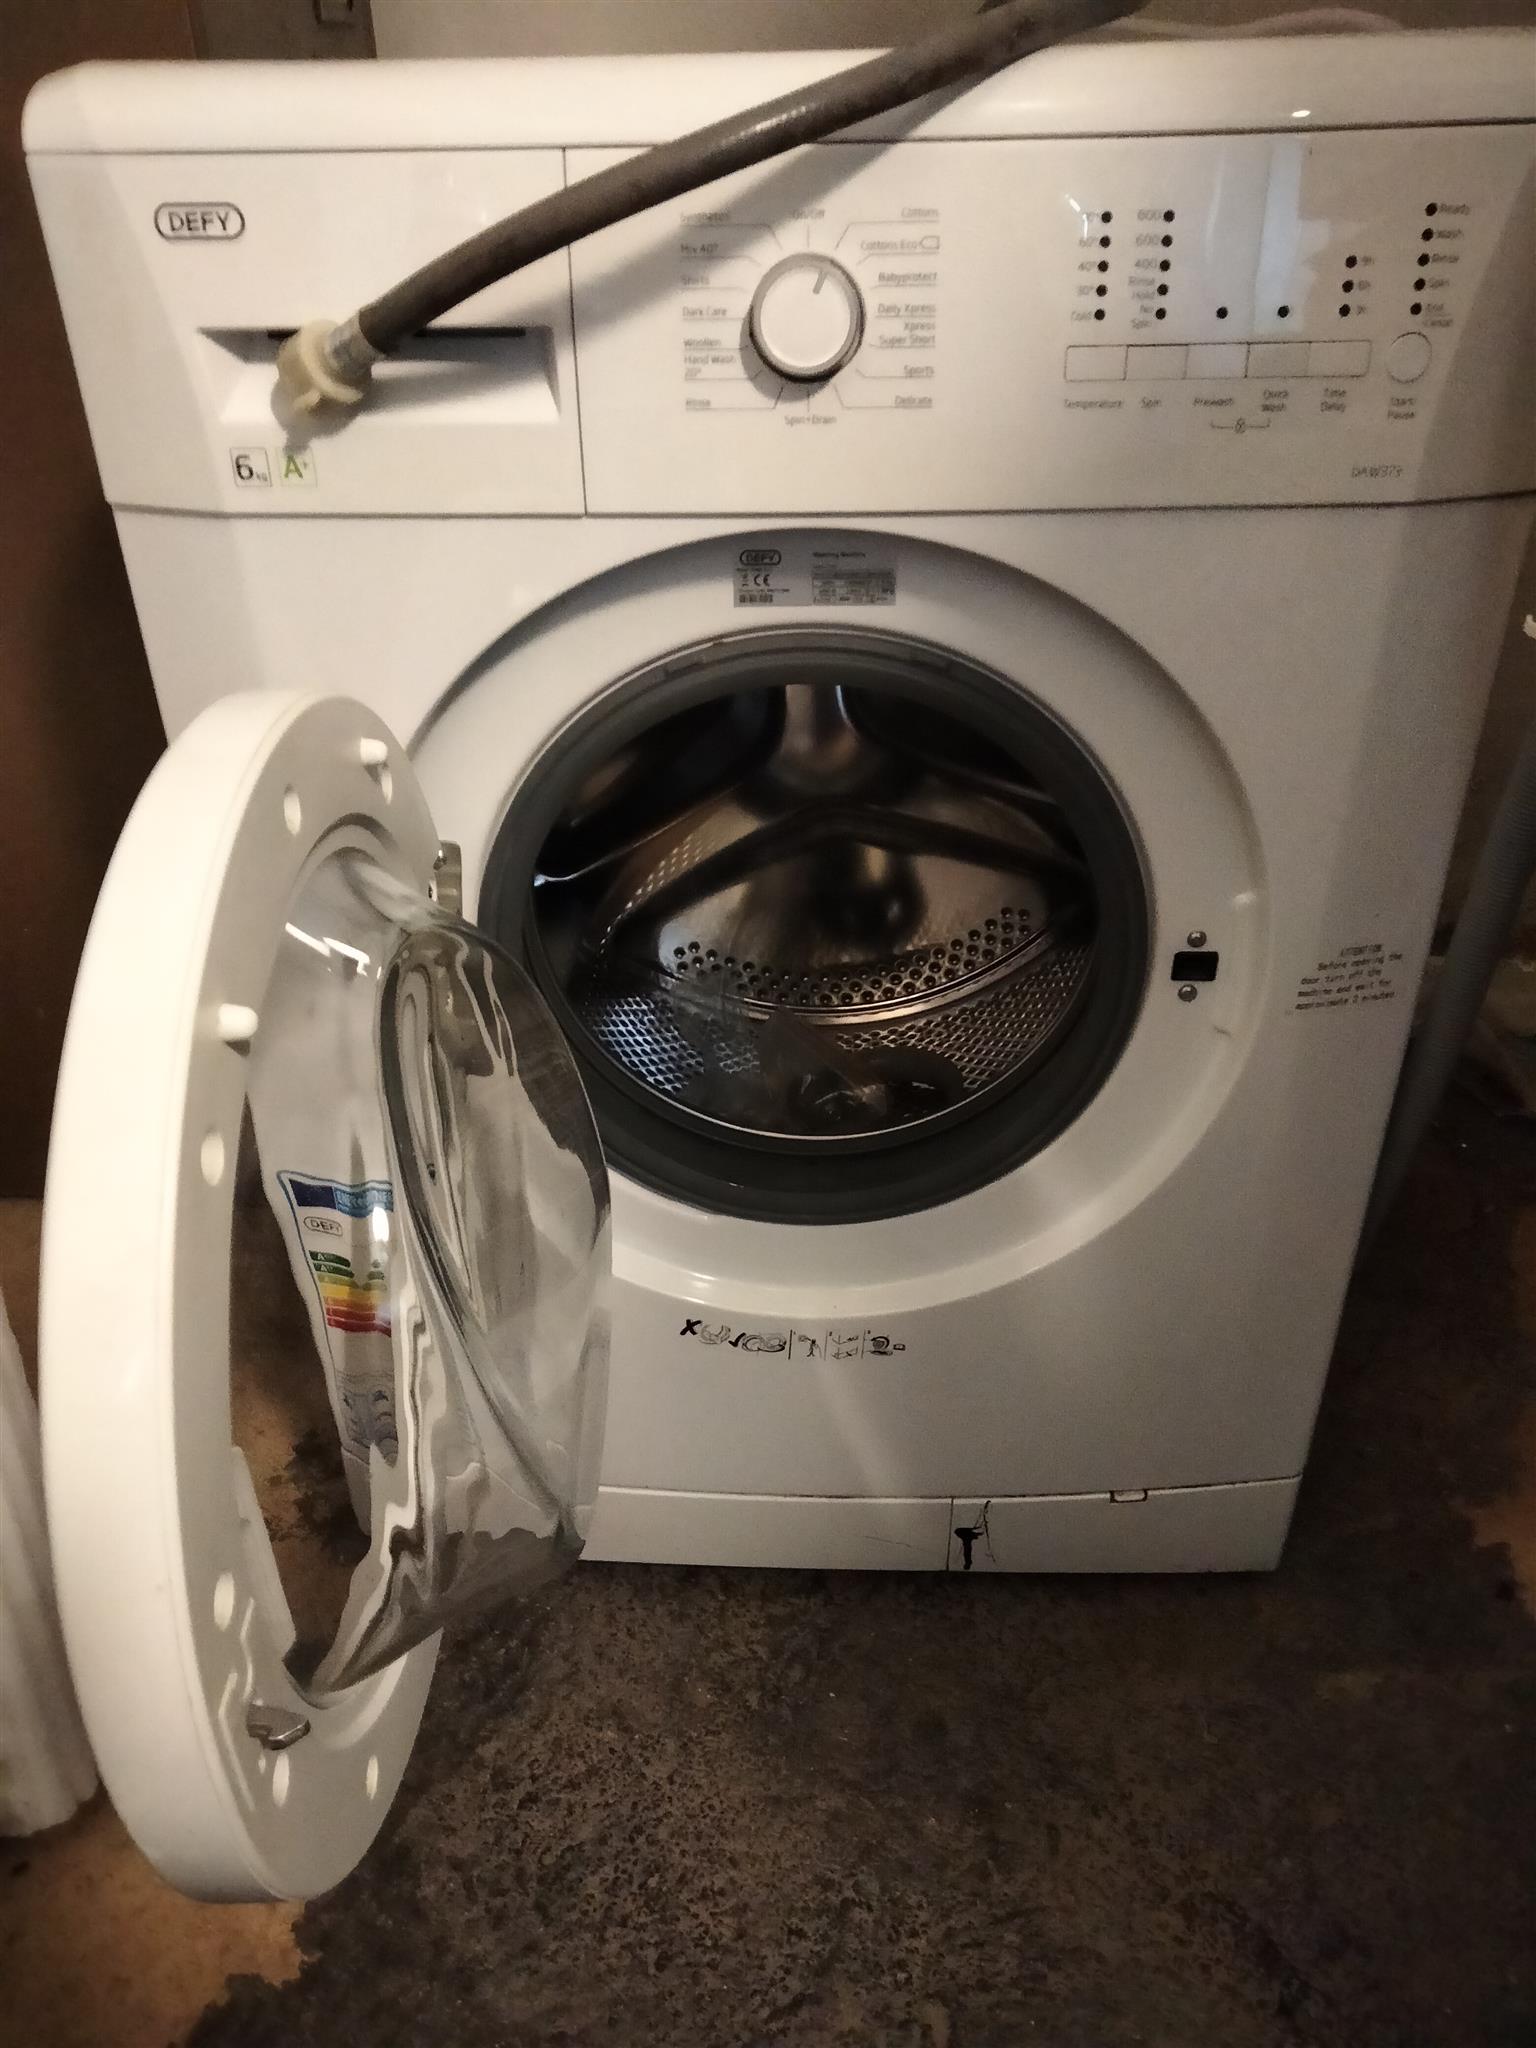 Defy 6kg energy saving washing machine for sale